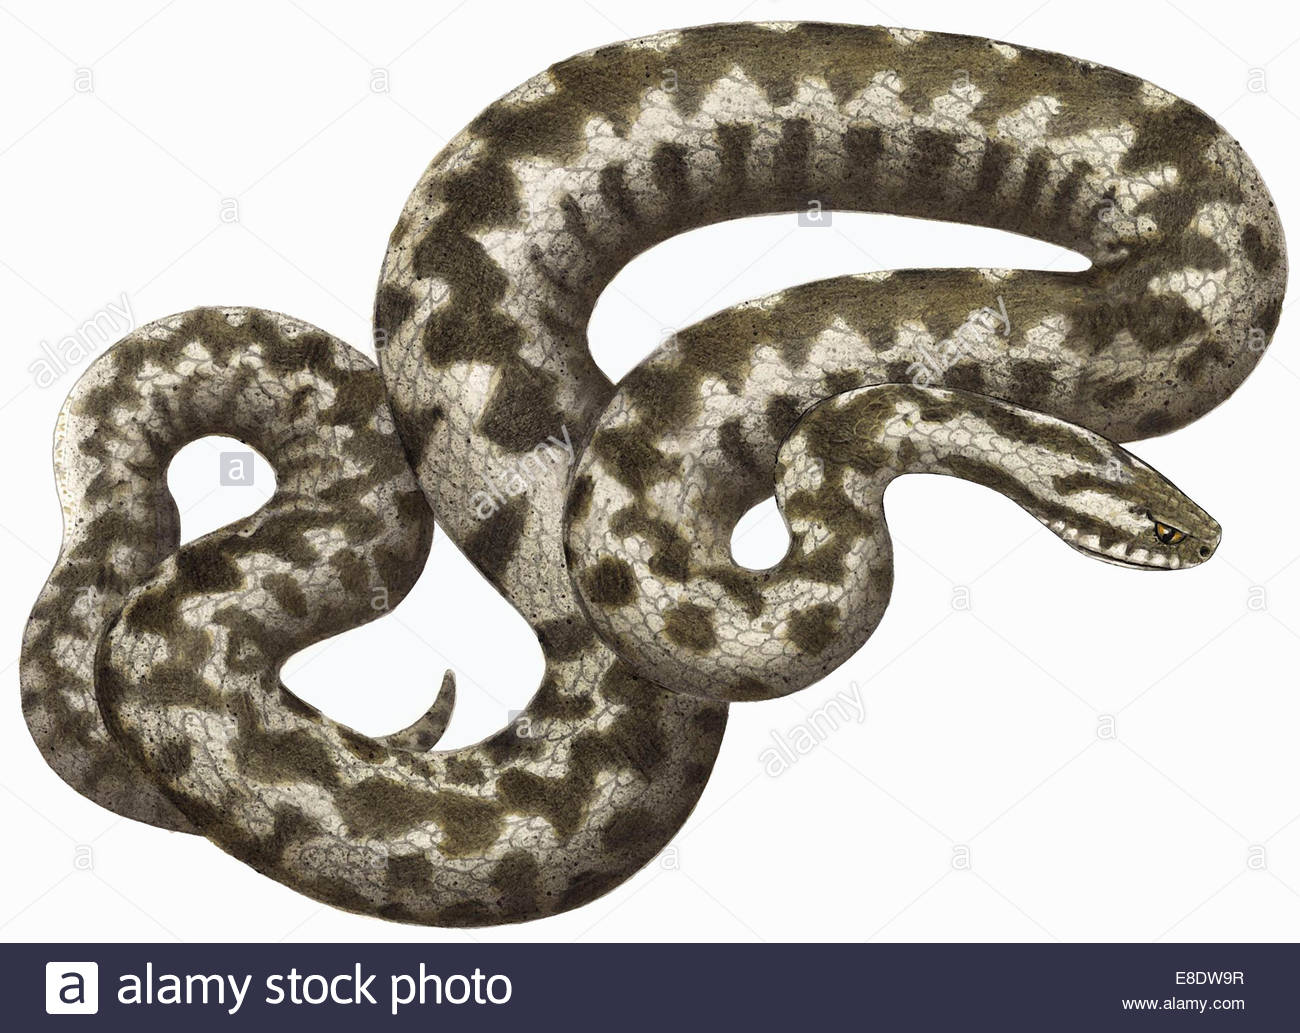 Adder Vipera Berus Snake On White Background Stock Photo